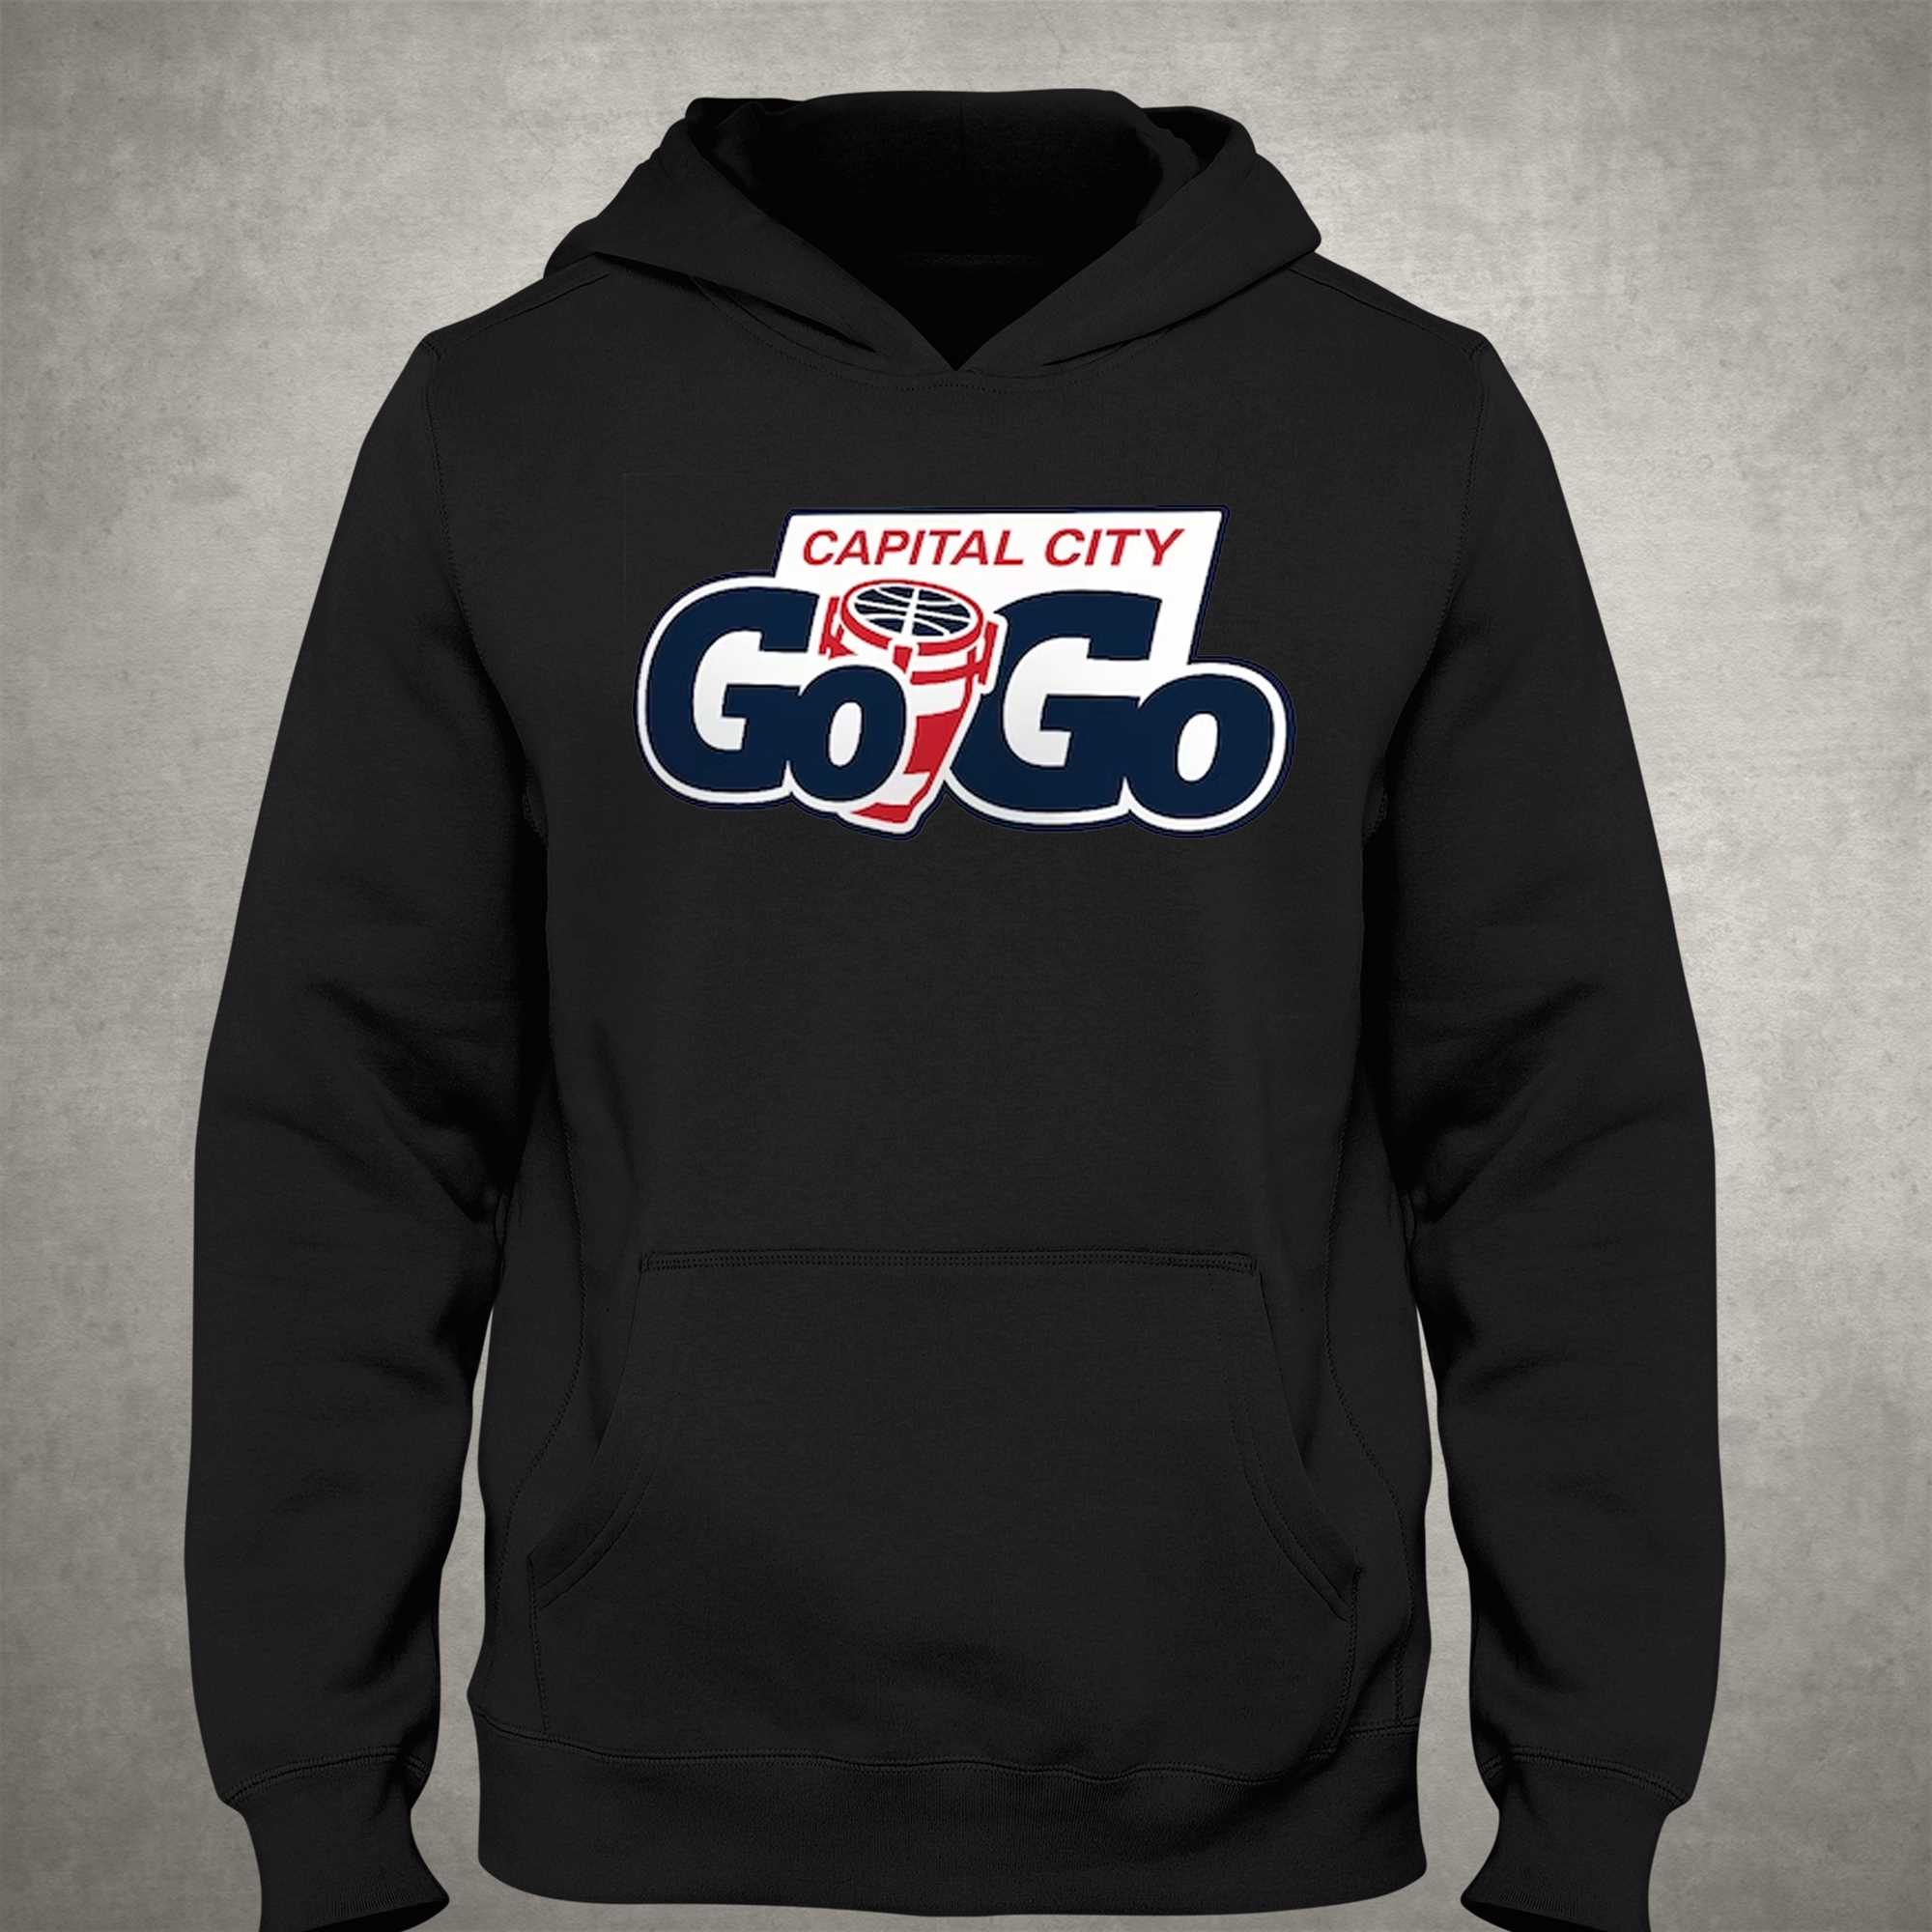 Official Capital City Go-go Fanatics Branded Primary Logo Sweashirt Hoodie 